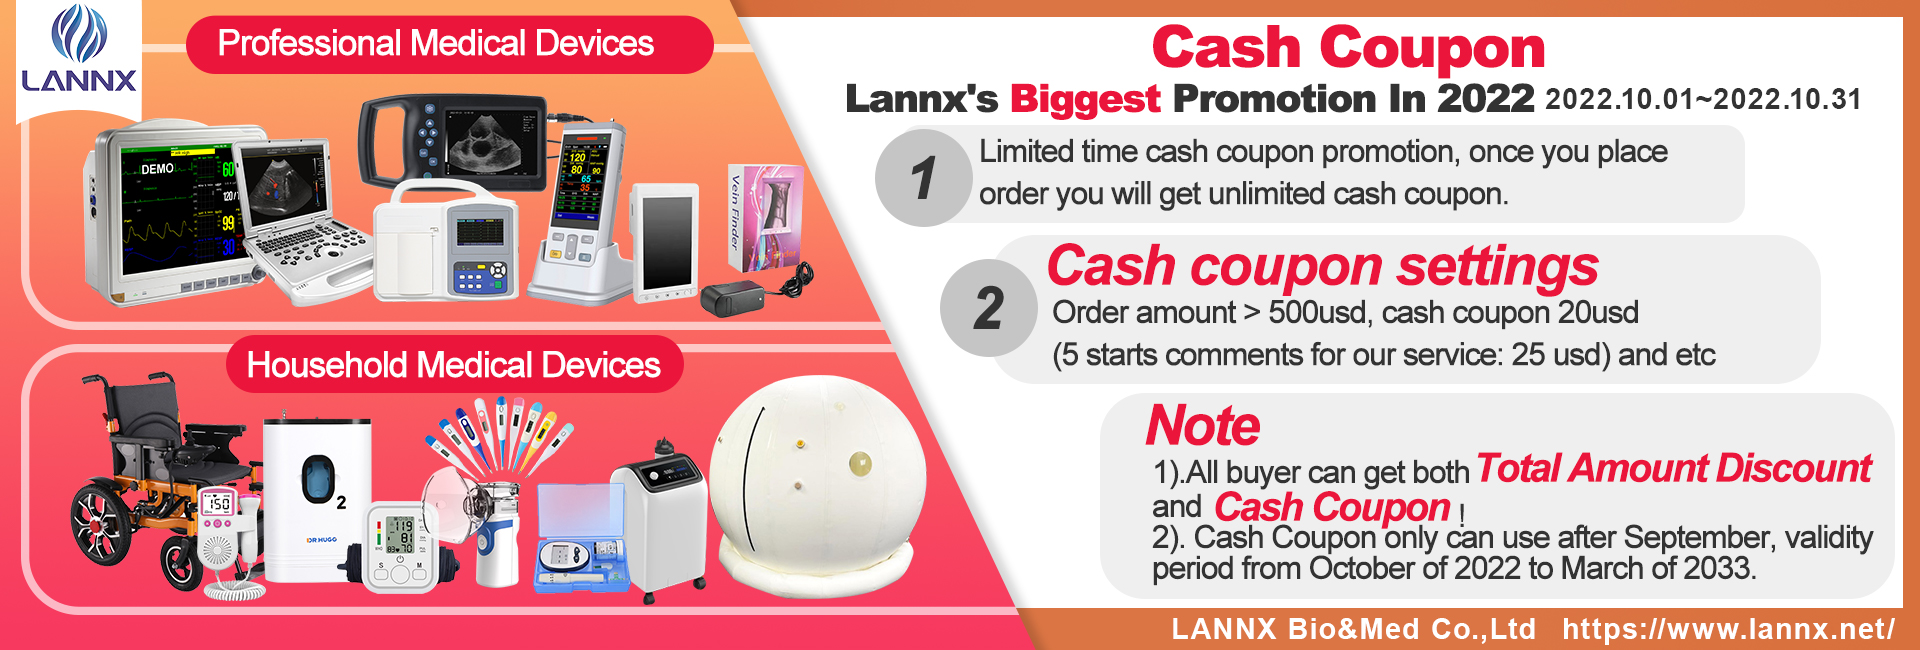 cash coupon lannx medical device